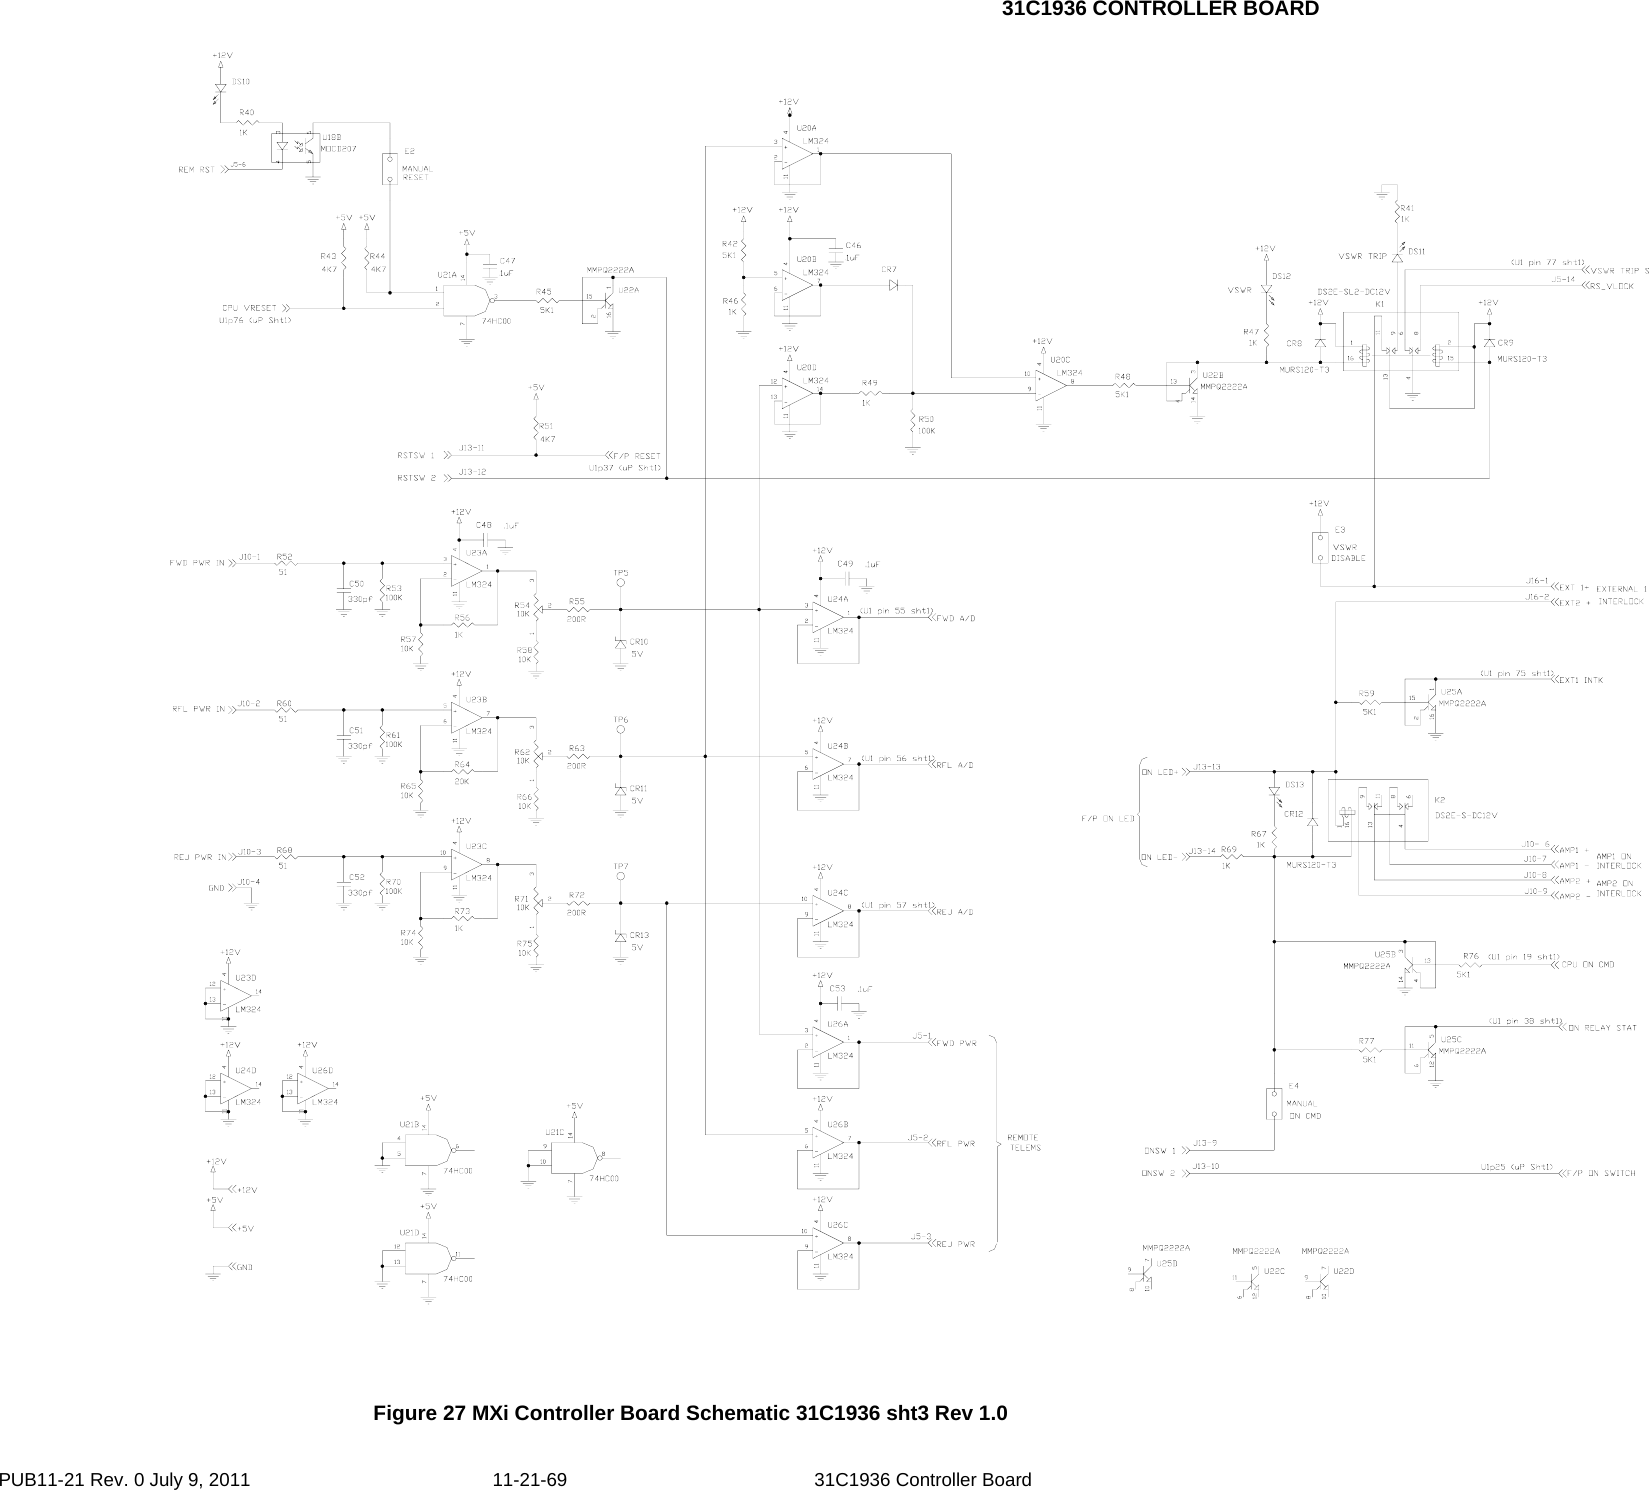 31C1936 CONTROLLER BOARD       Figure 27 MXi Controller Board Schematic 31C1936 sht3 Rev 1.0  PUB11-21 Rev. 0 July 9, 2011  11-21-69  31C1936 Controller Board  